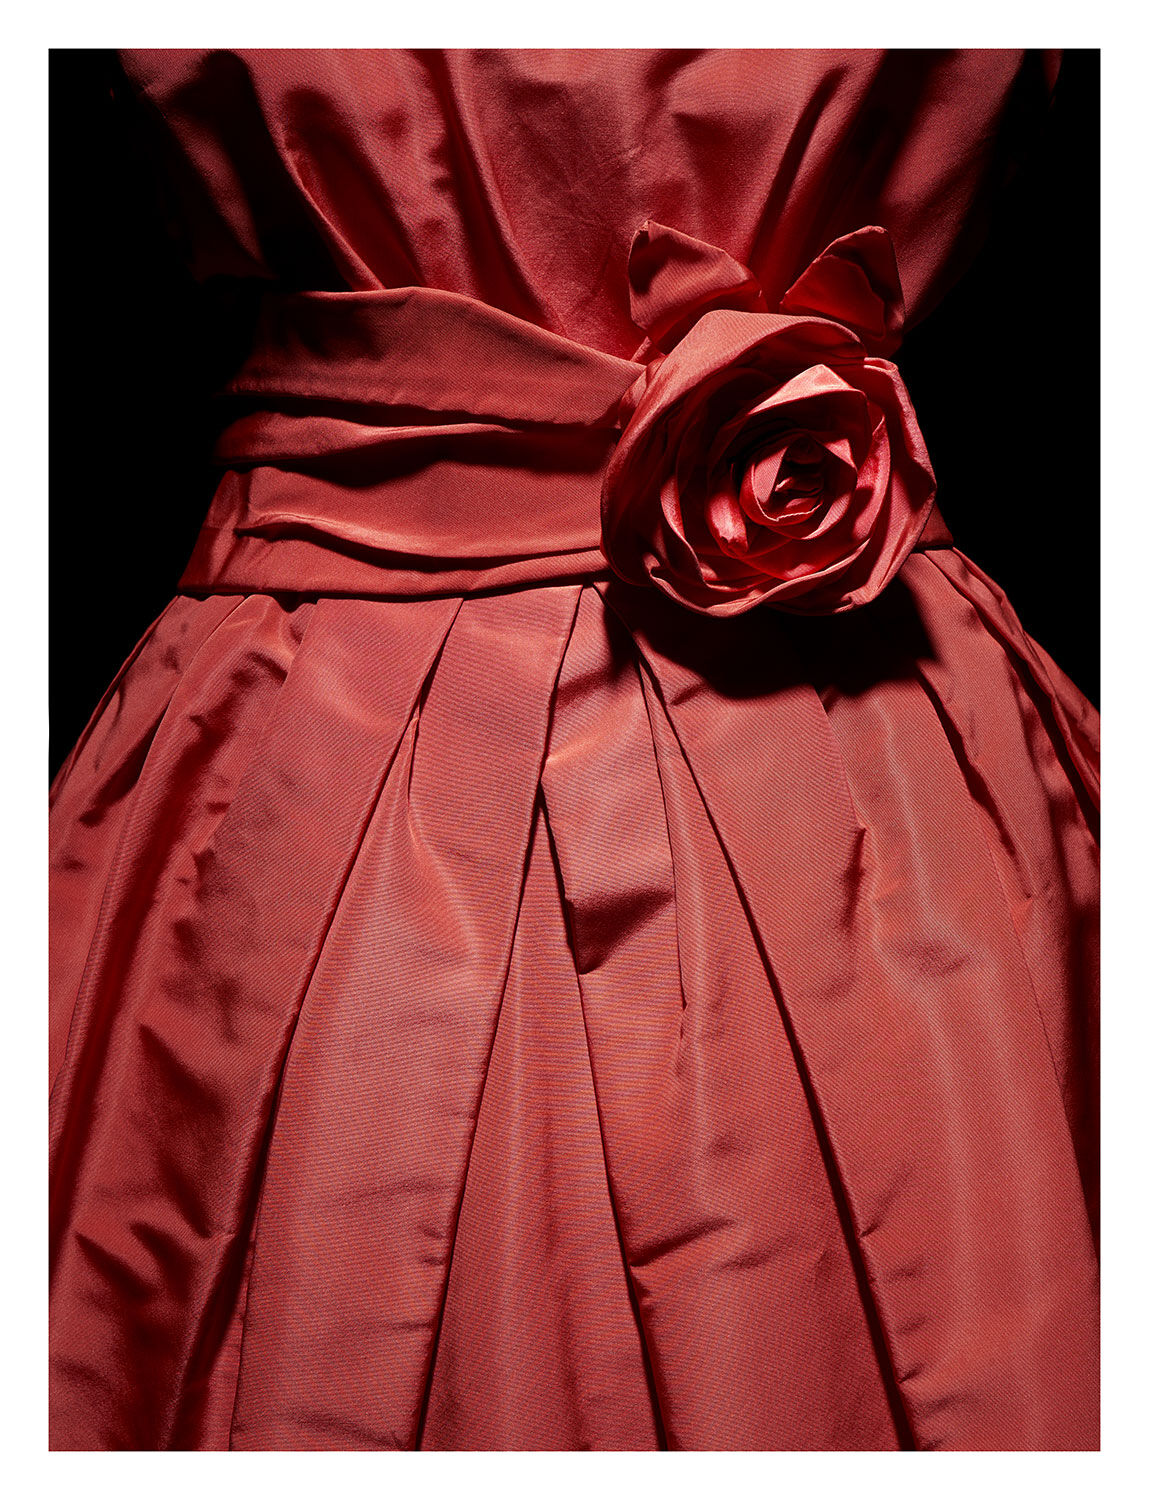 Dior and Roses - Triển lãm hoa hồng trong thế giới thời trang Dior-5